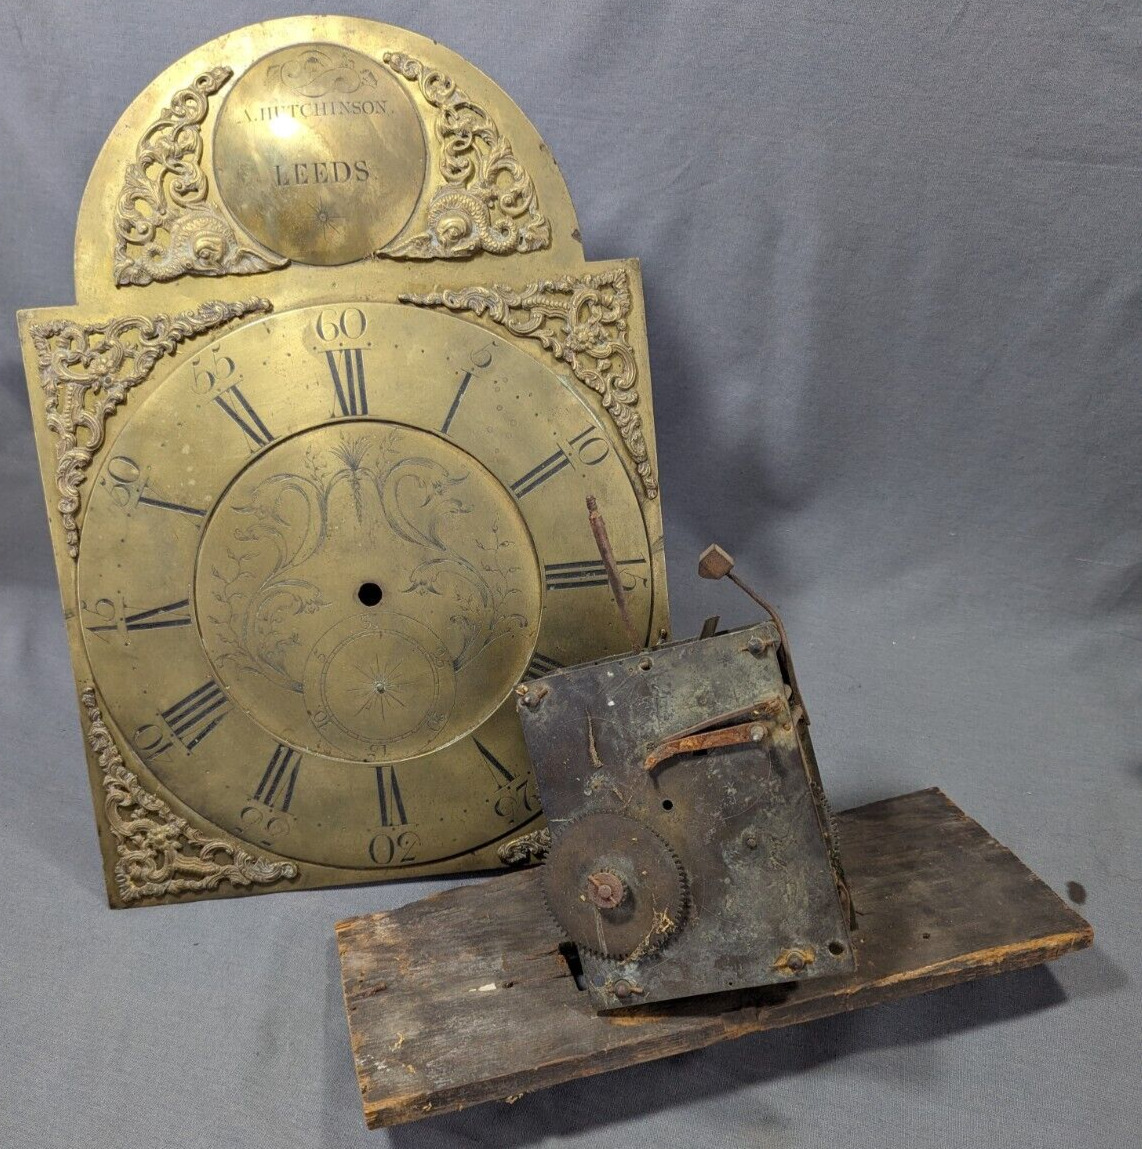 Rare 18th Century Brass Clock Face Dial A. Hutchinson LEEDS 1750-1780 Engraved